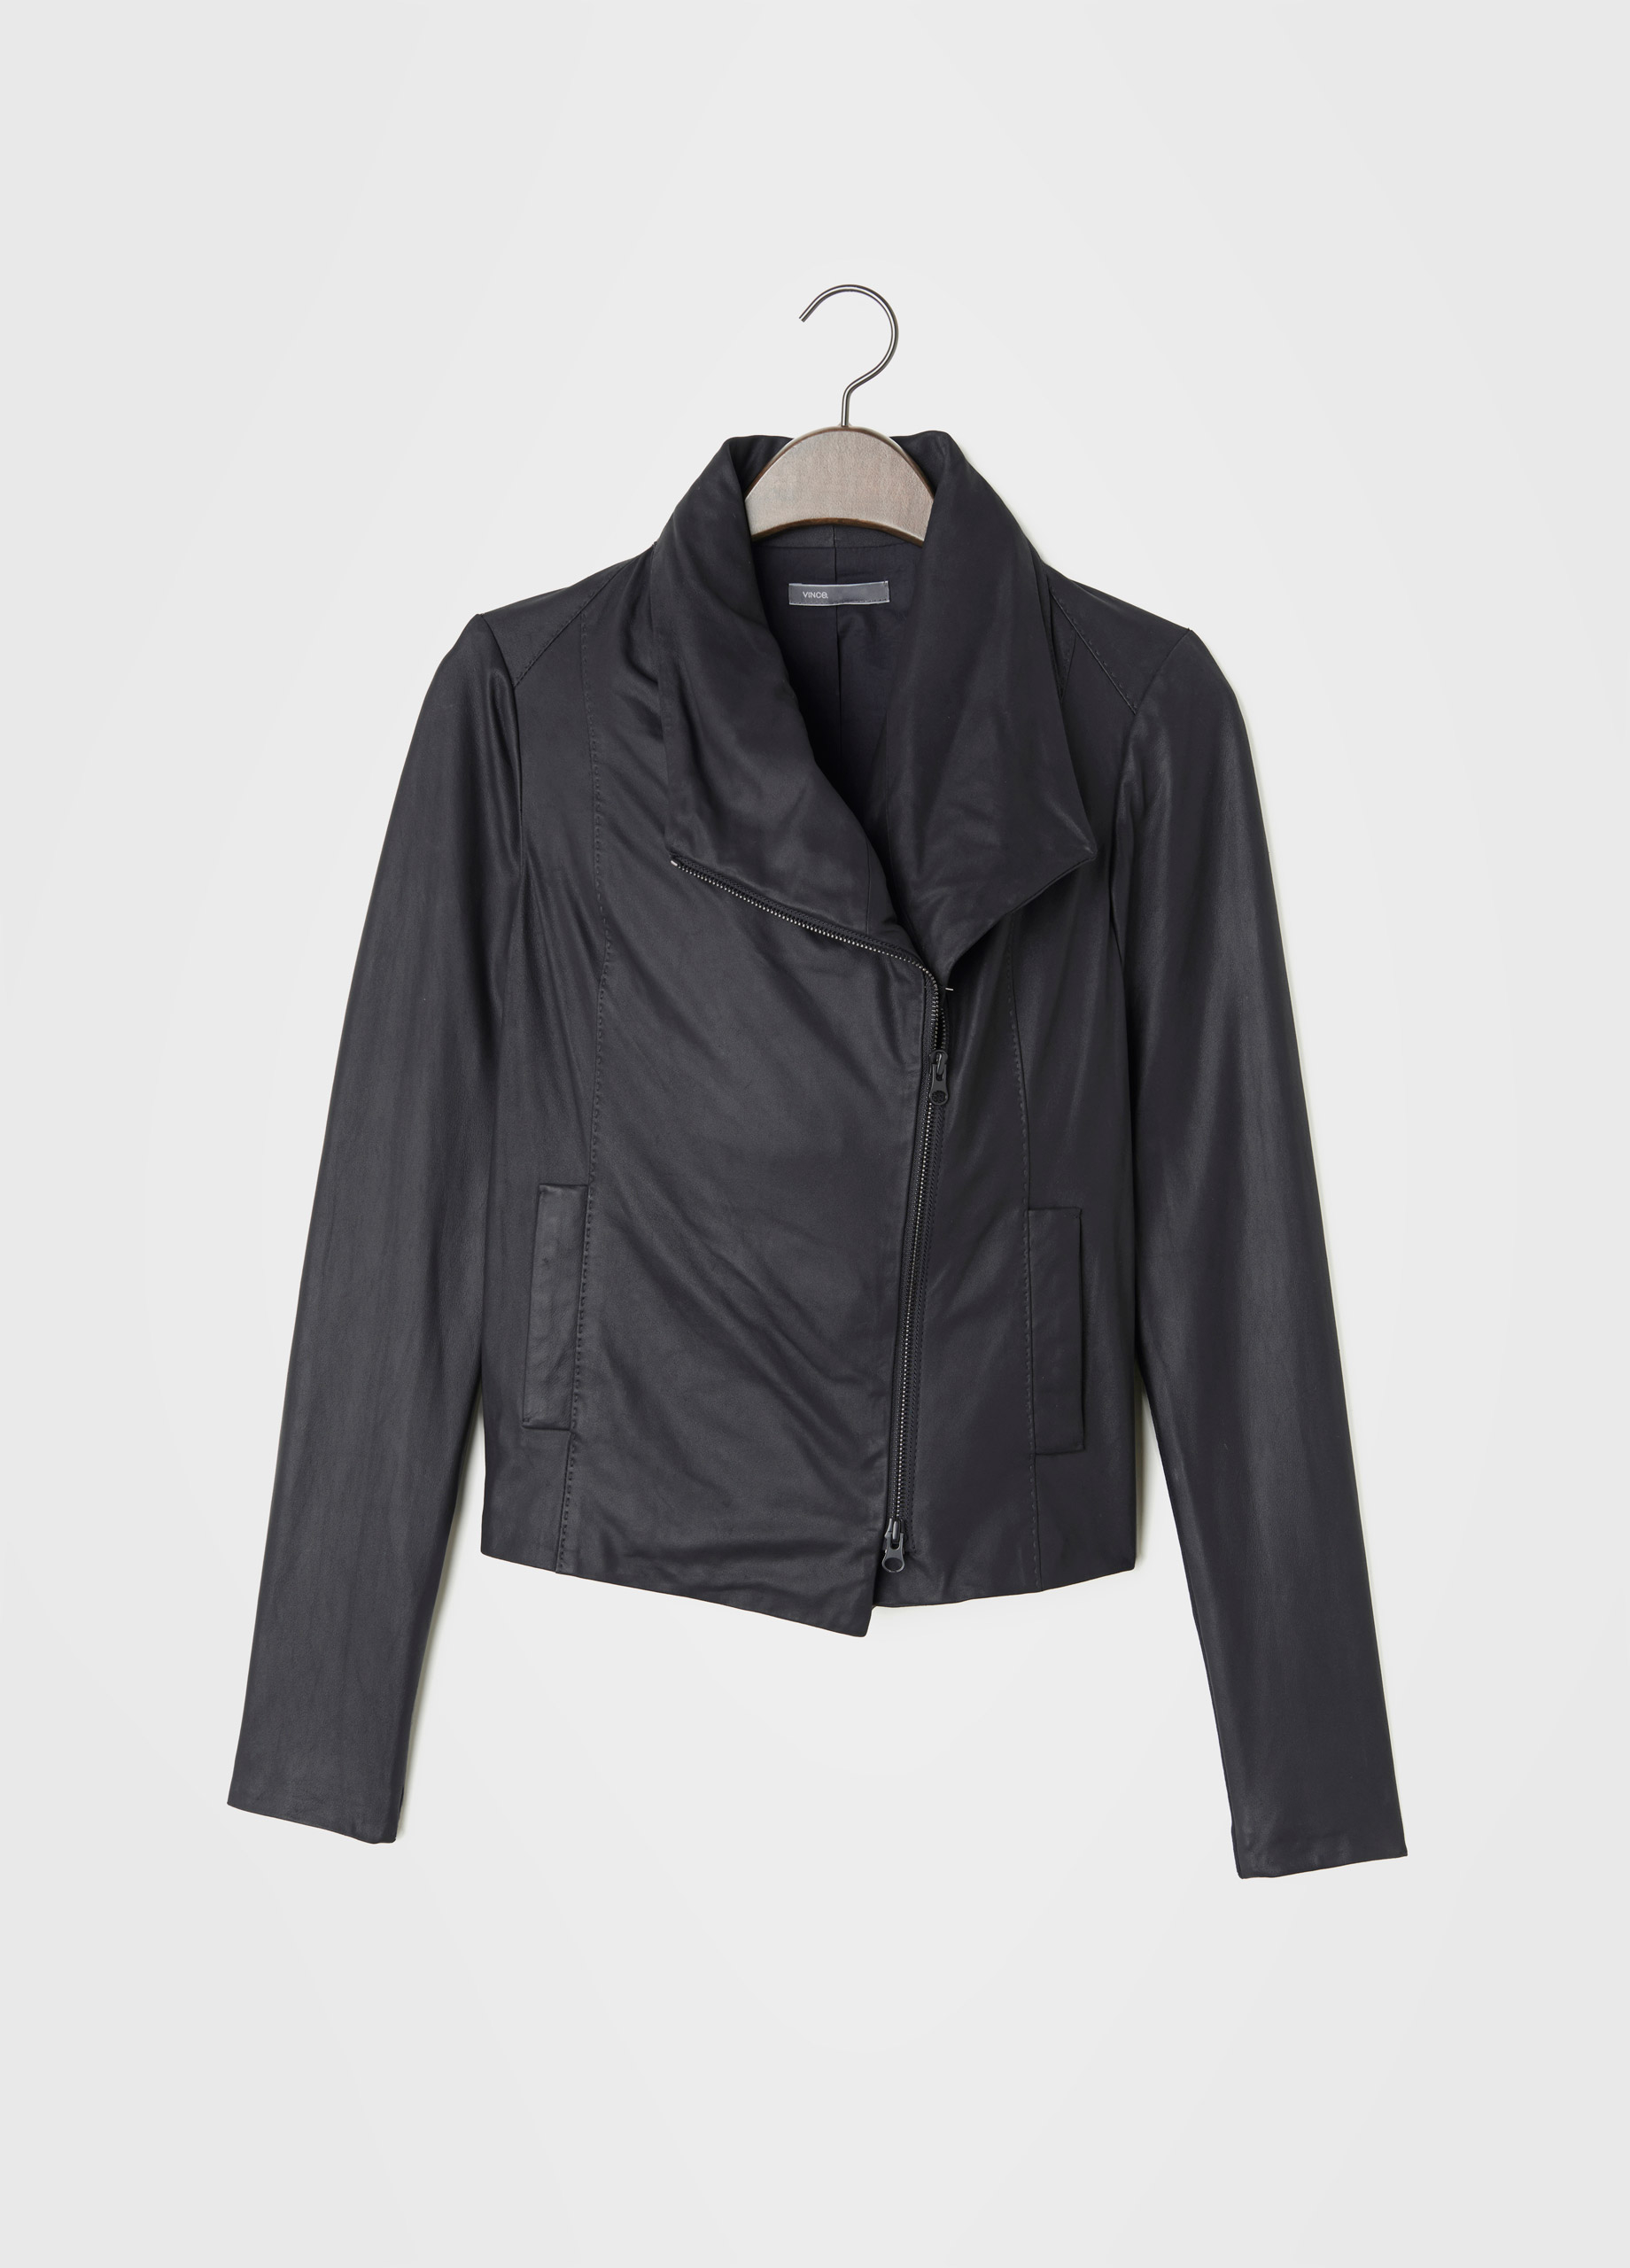 Vince Paper Leather Scuba Jacket in Black | Lyst